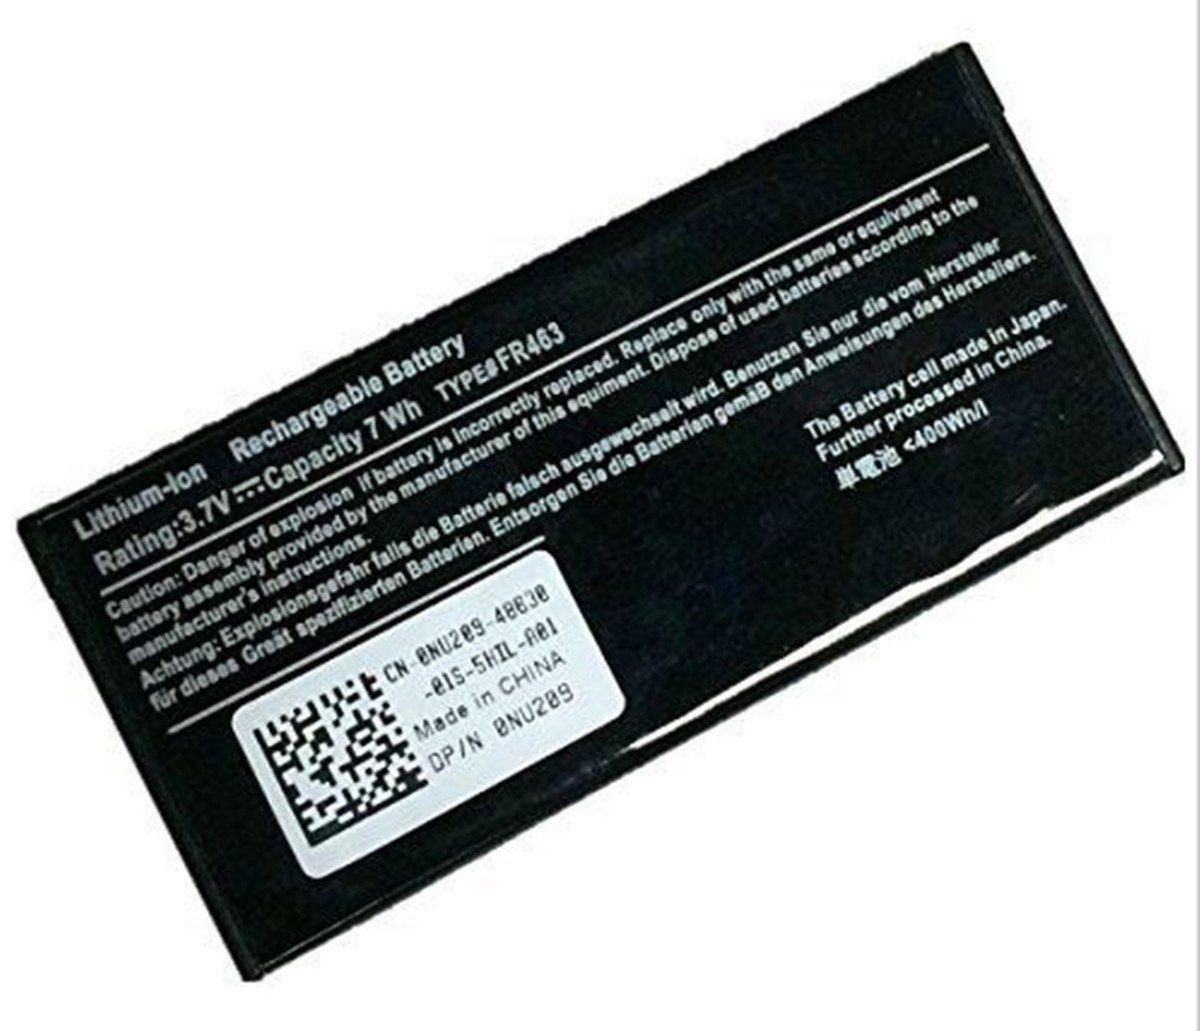 Dell Poweredge Perc 5i battery